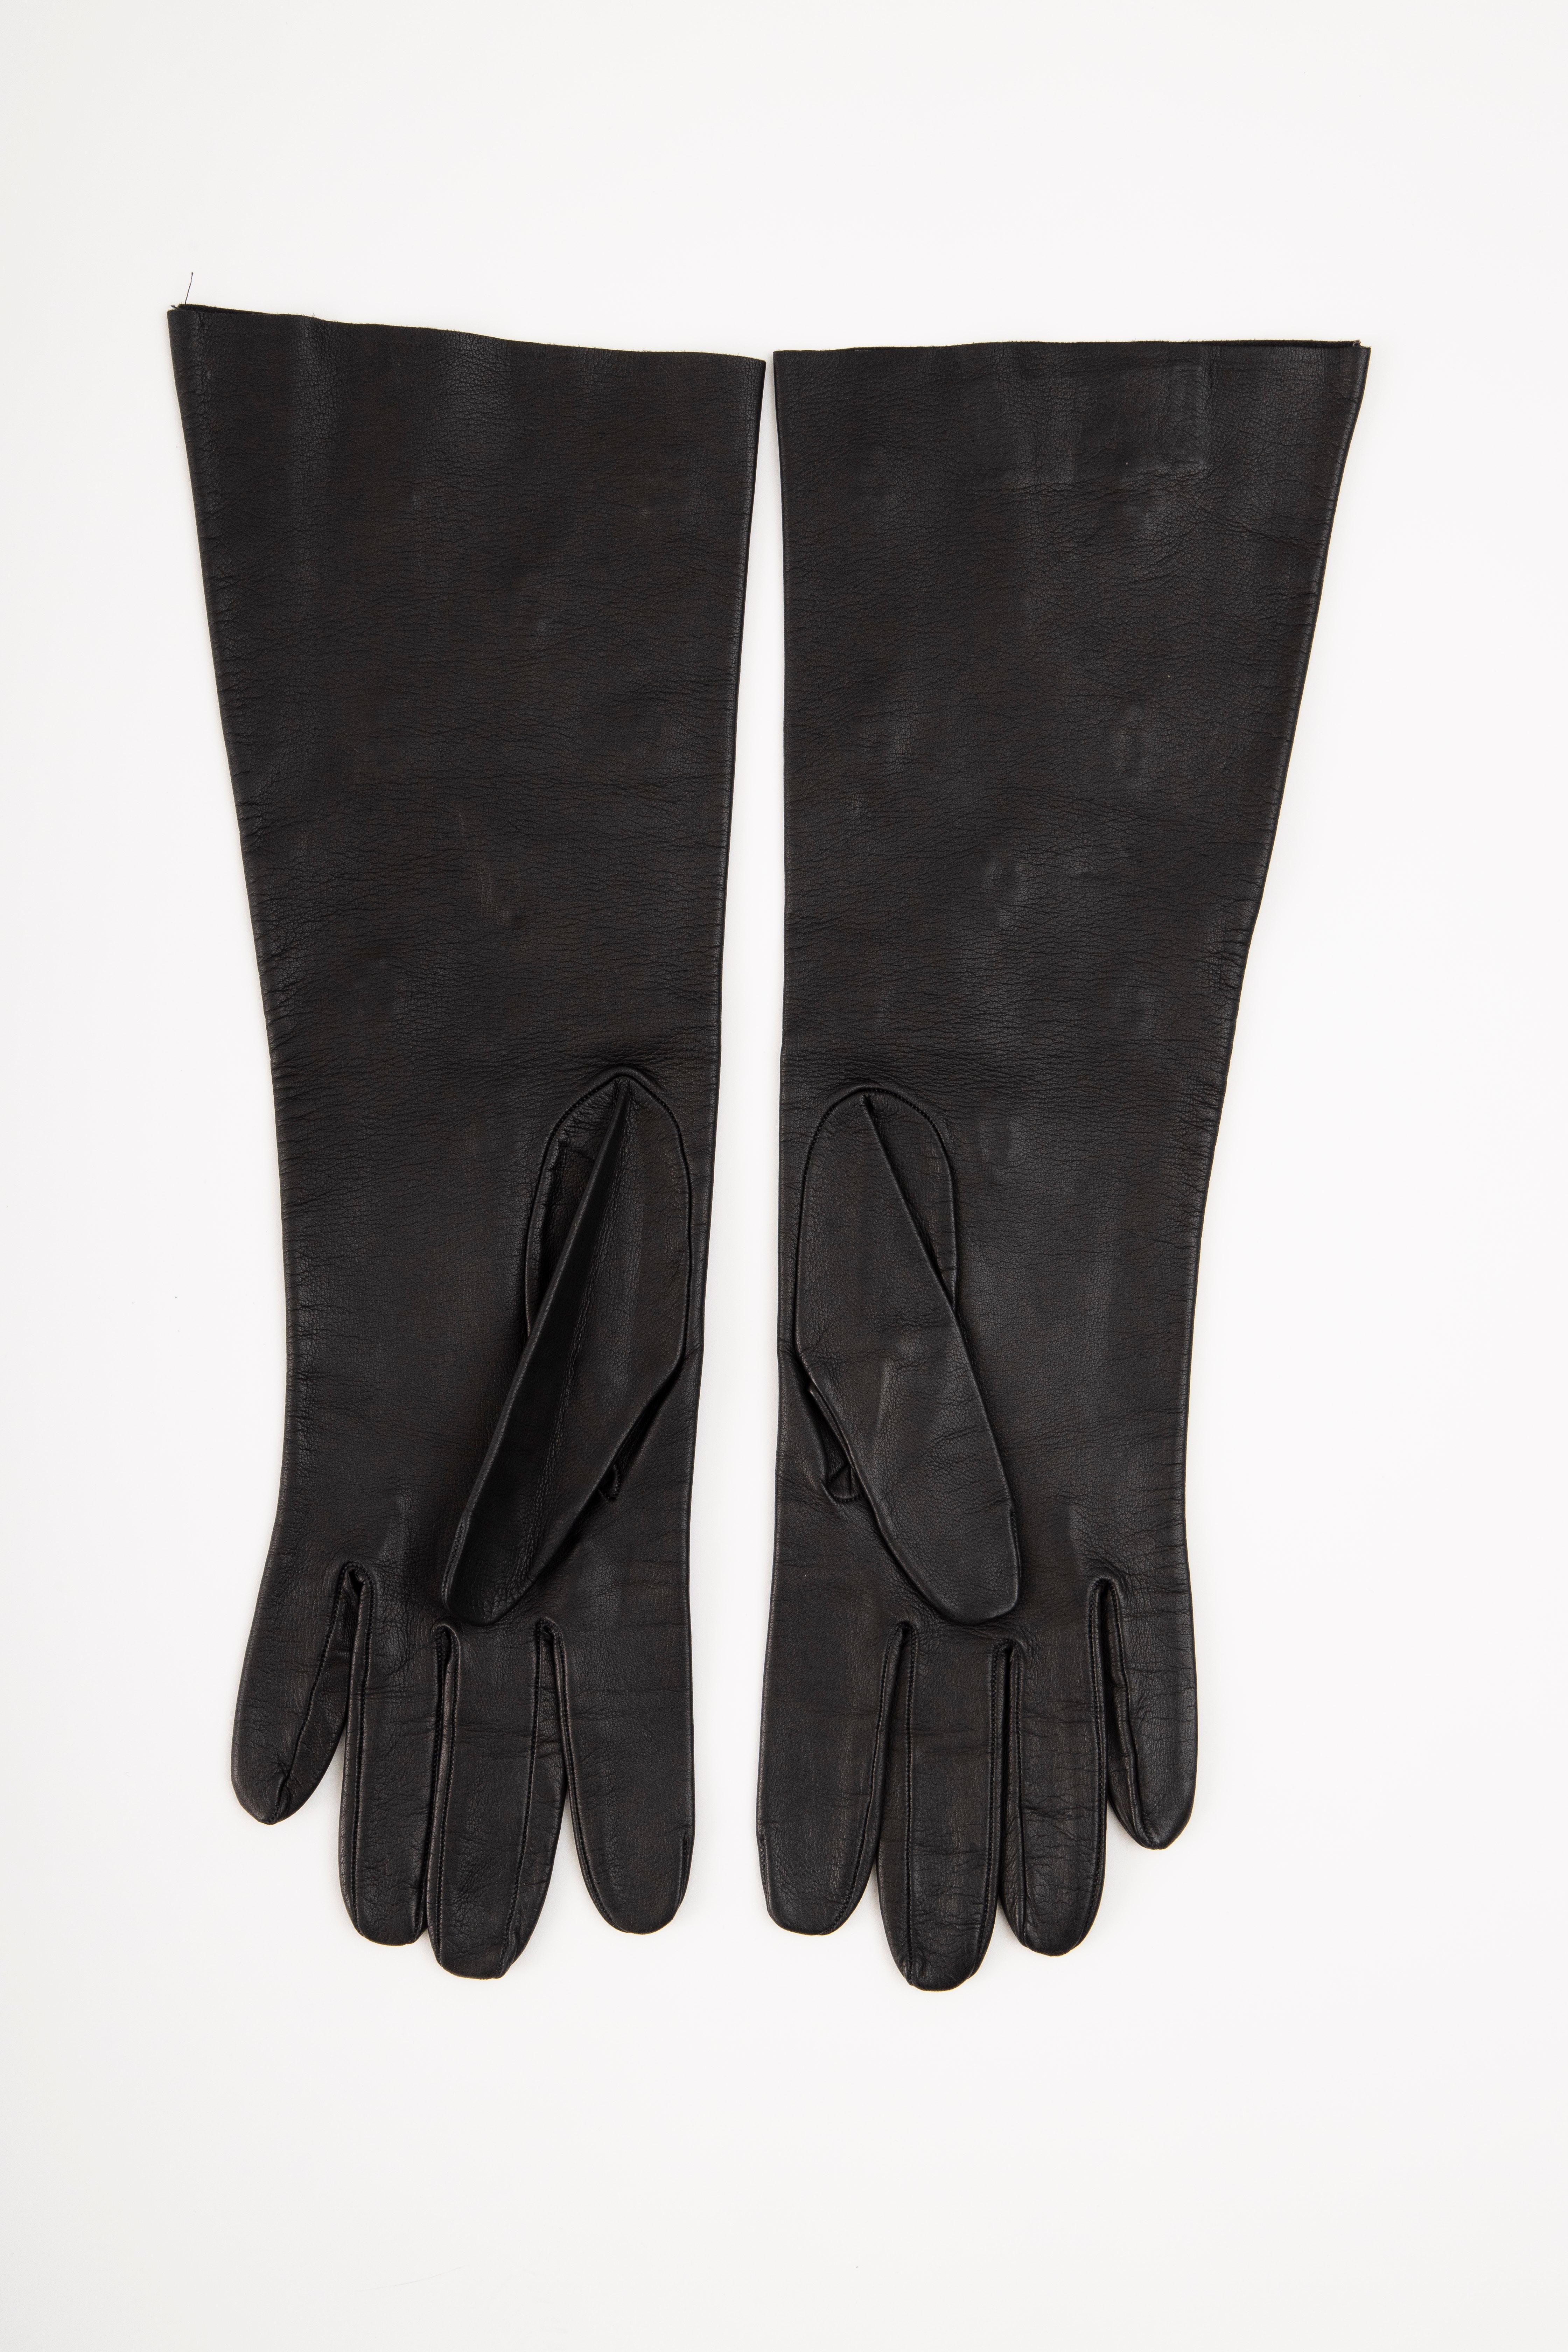 Women's Yves Saint Laurent Black Leather & Appliquéd Green Glass Gloves, Circa: 1980's For Sale